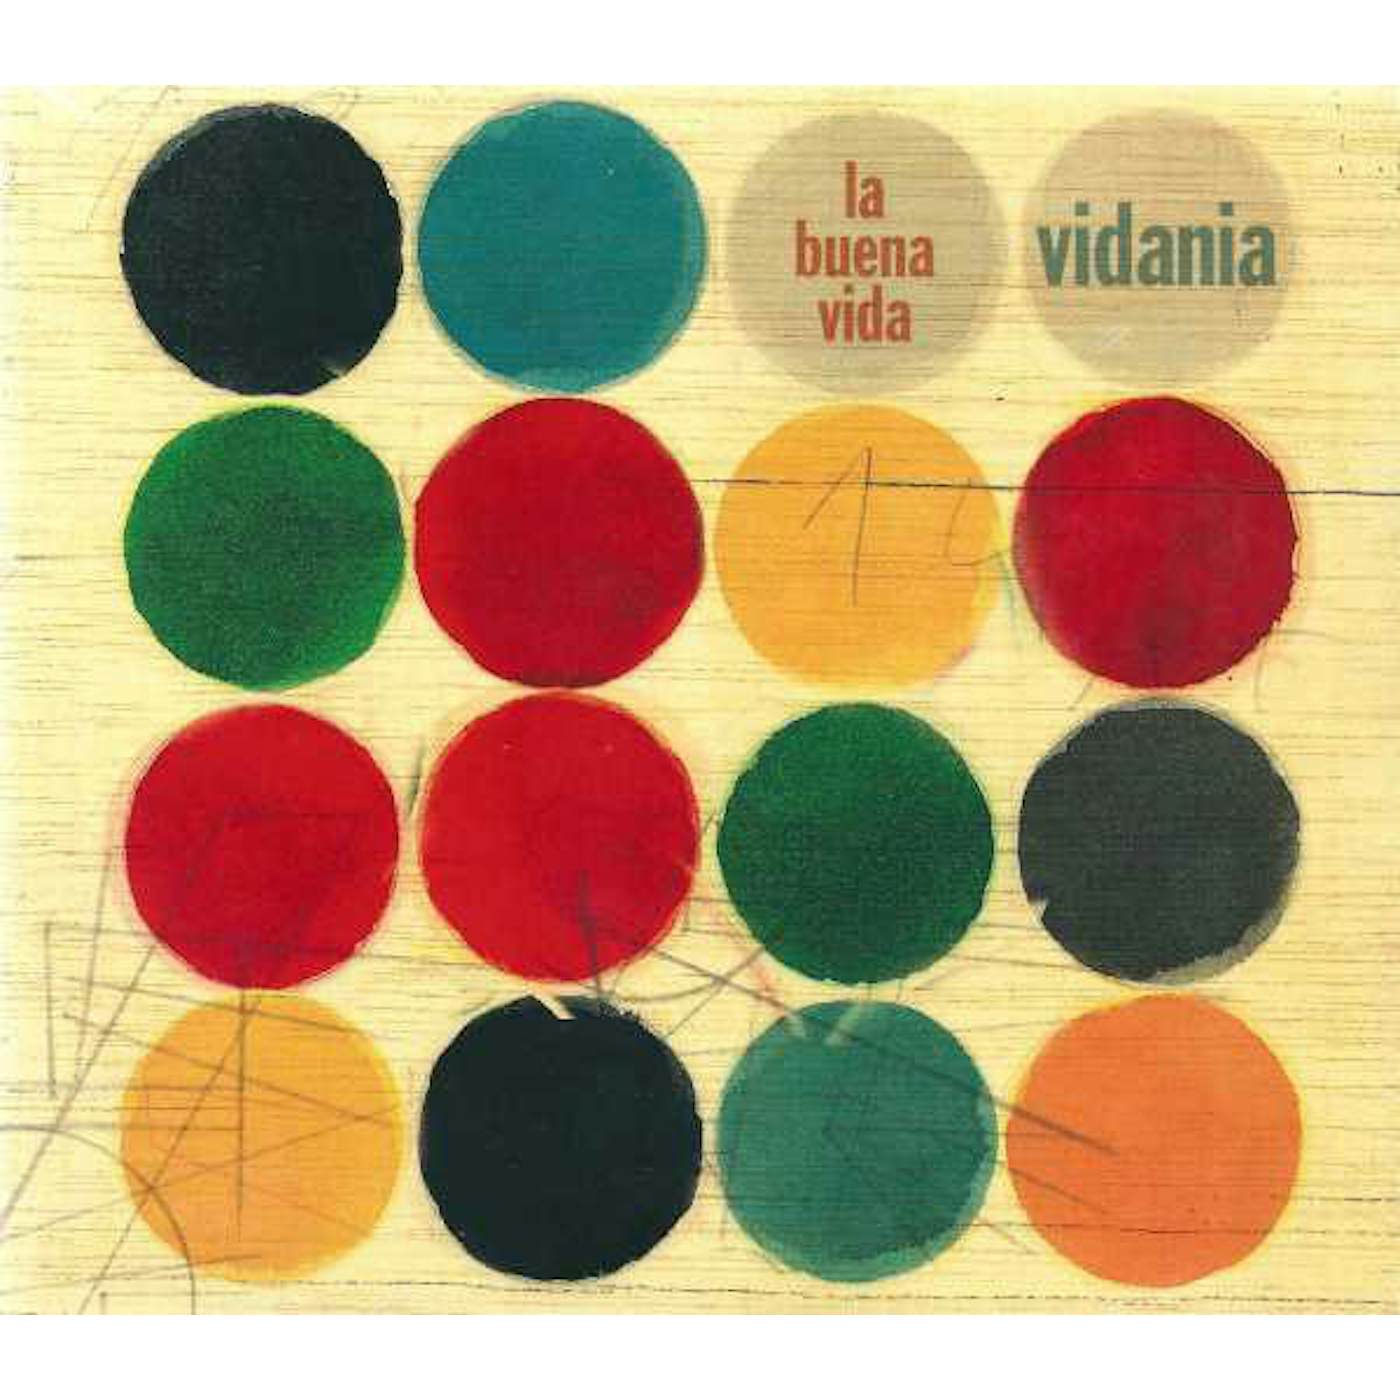 La Buena Vida VIDANIA Vinyl Record